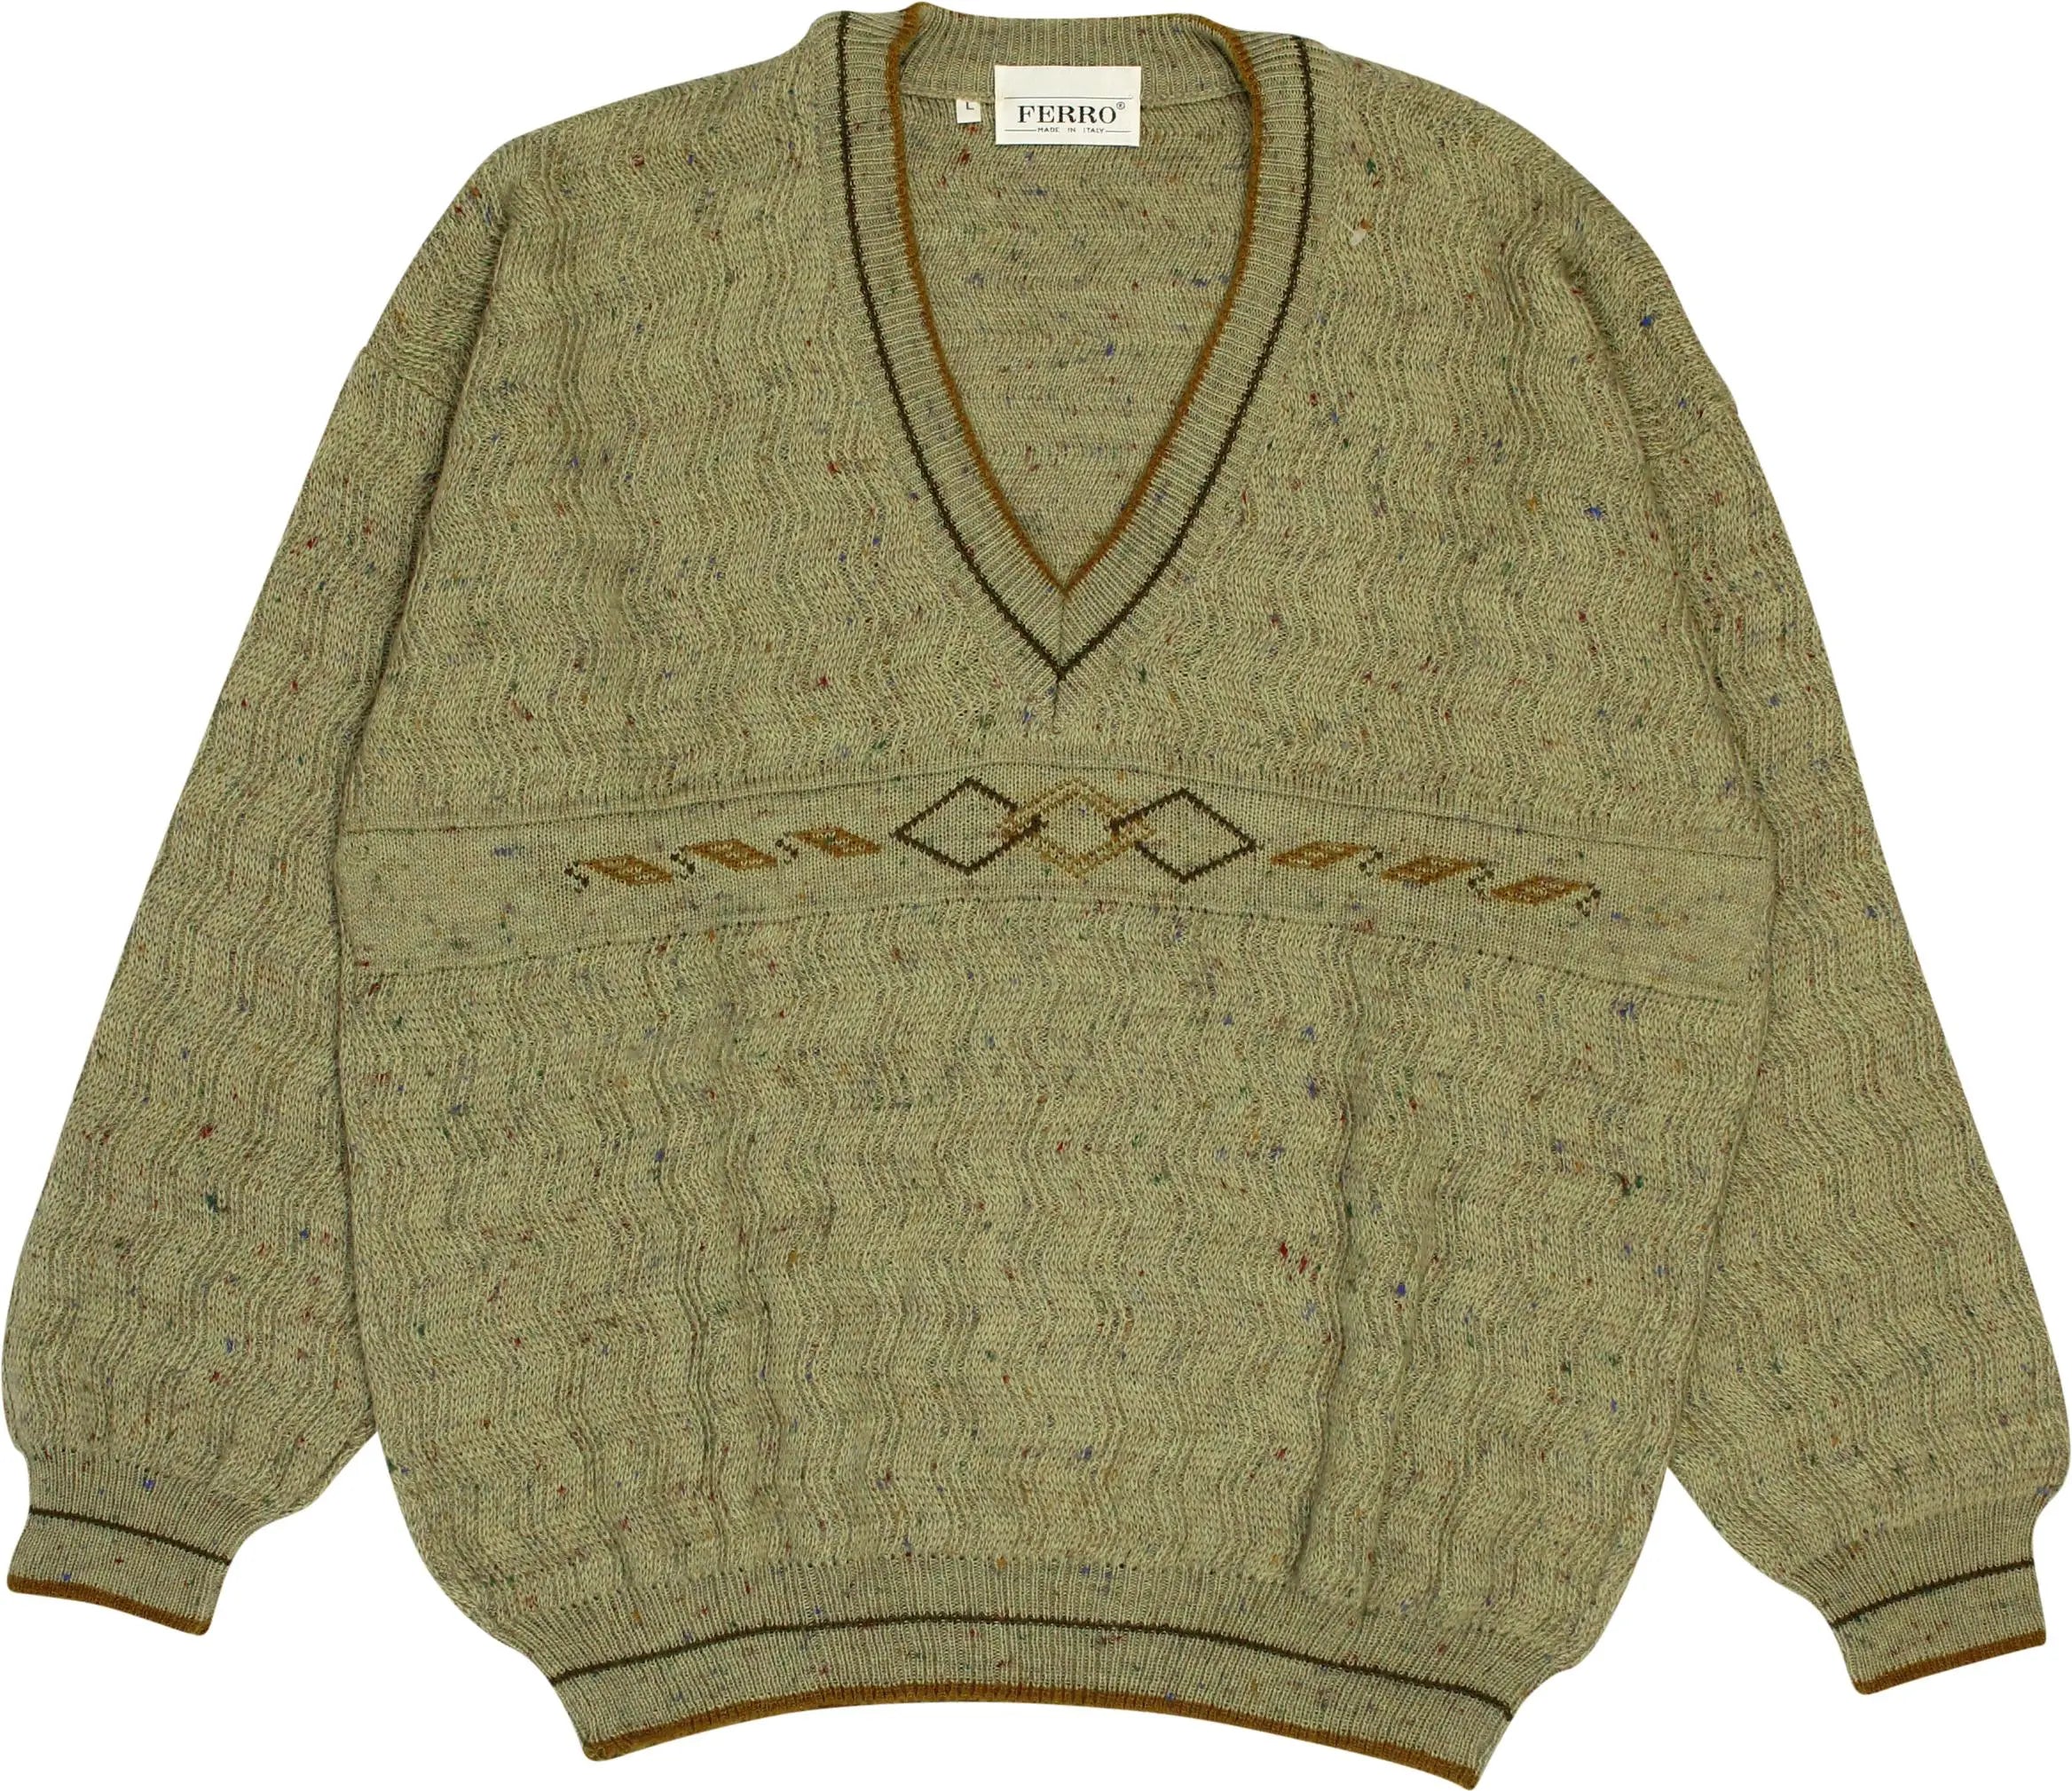 Ferro - 90s Wool Blend V-Neck Jumper- ThriftTale.com - Vintage and second handclothing